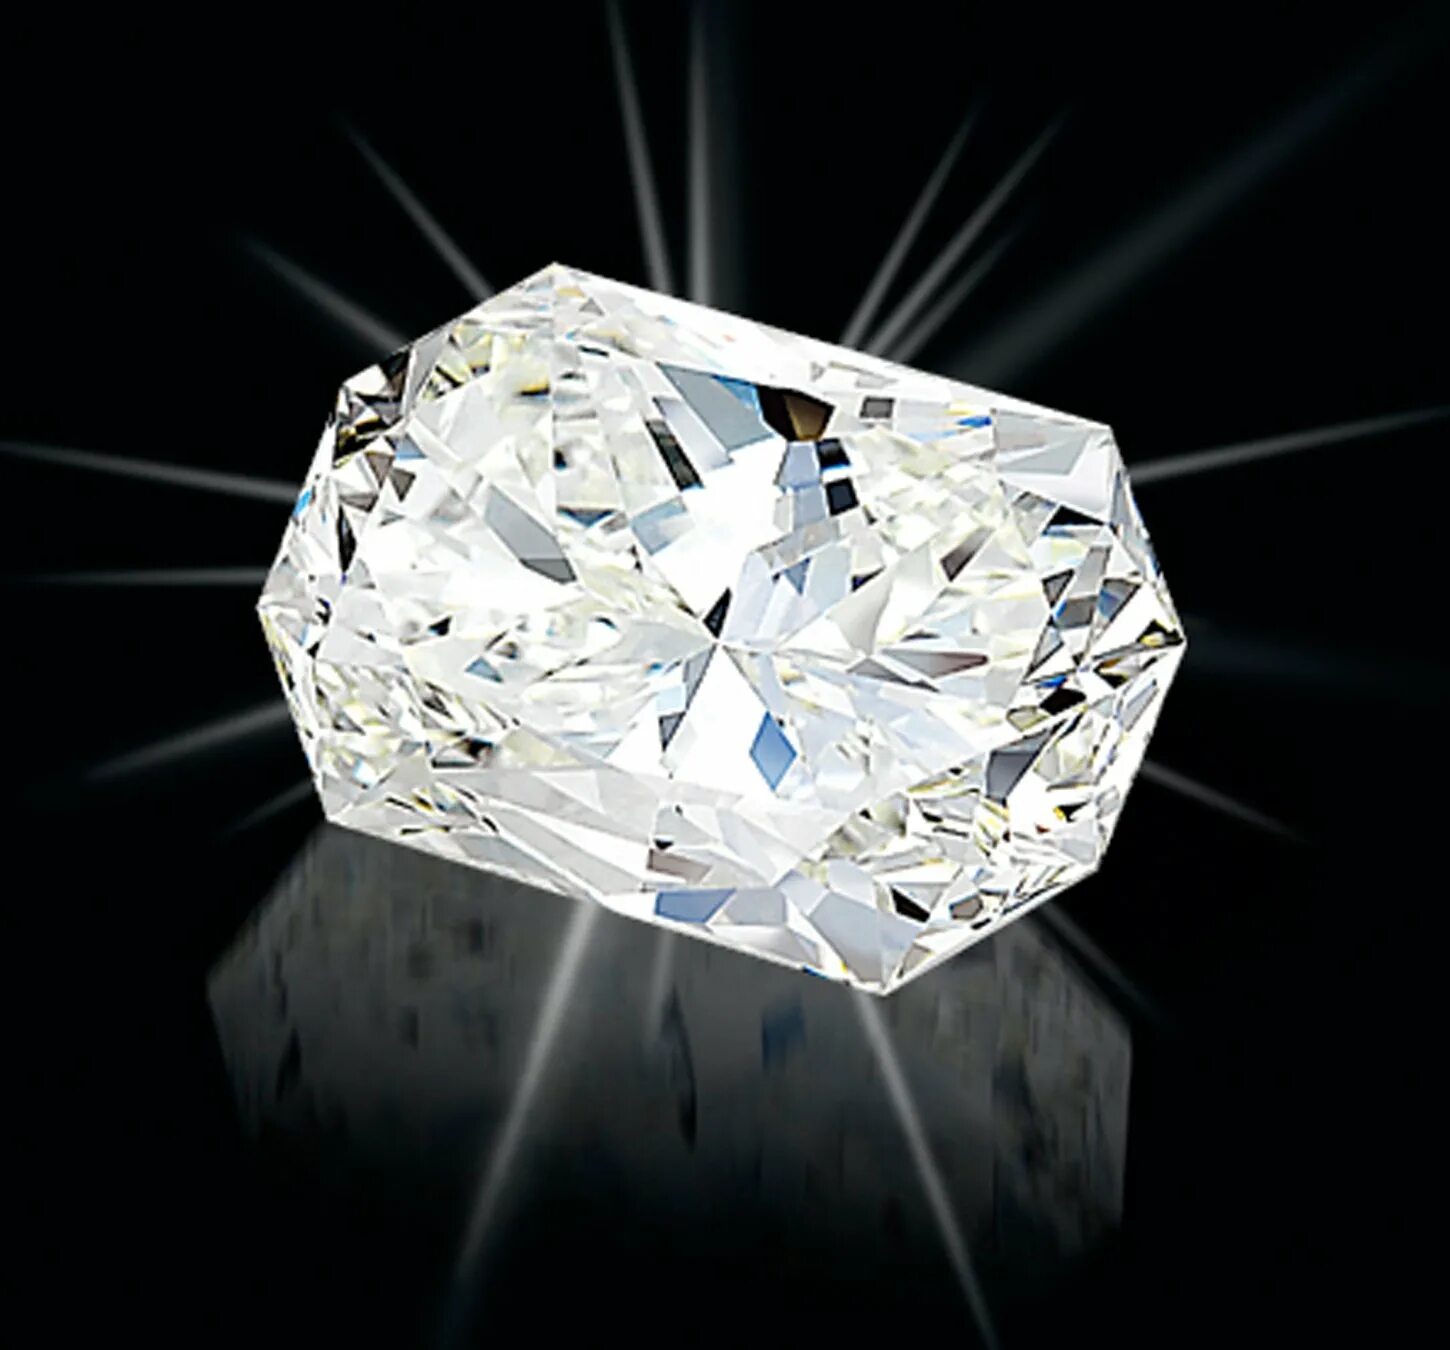 Diamond crystal. Адамант Алмаз. Адамант камень драгоценный. Магнонный Кристалл. Бриллианты и Алмазы и Кристаллы.